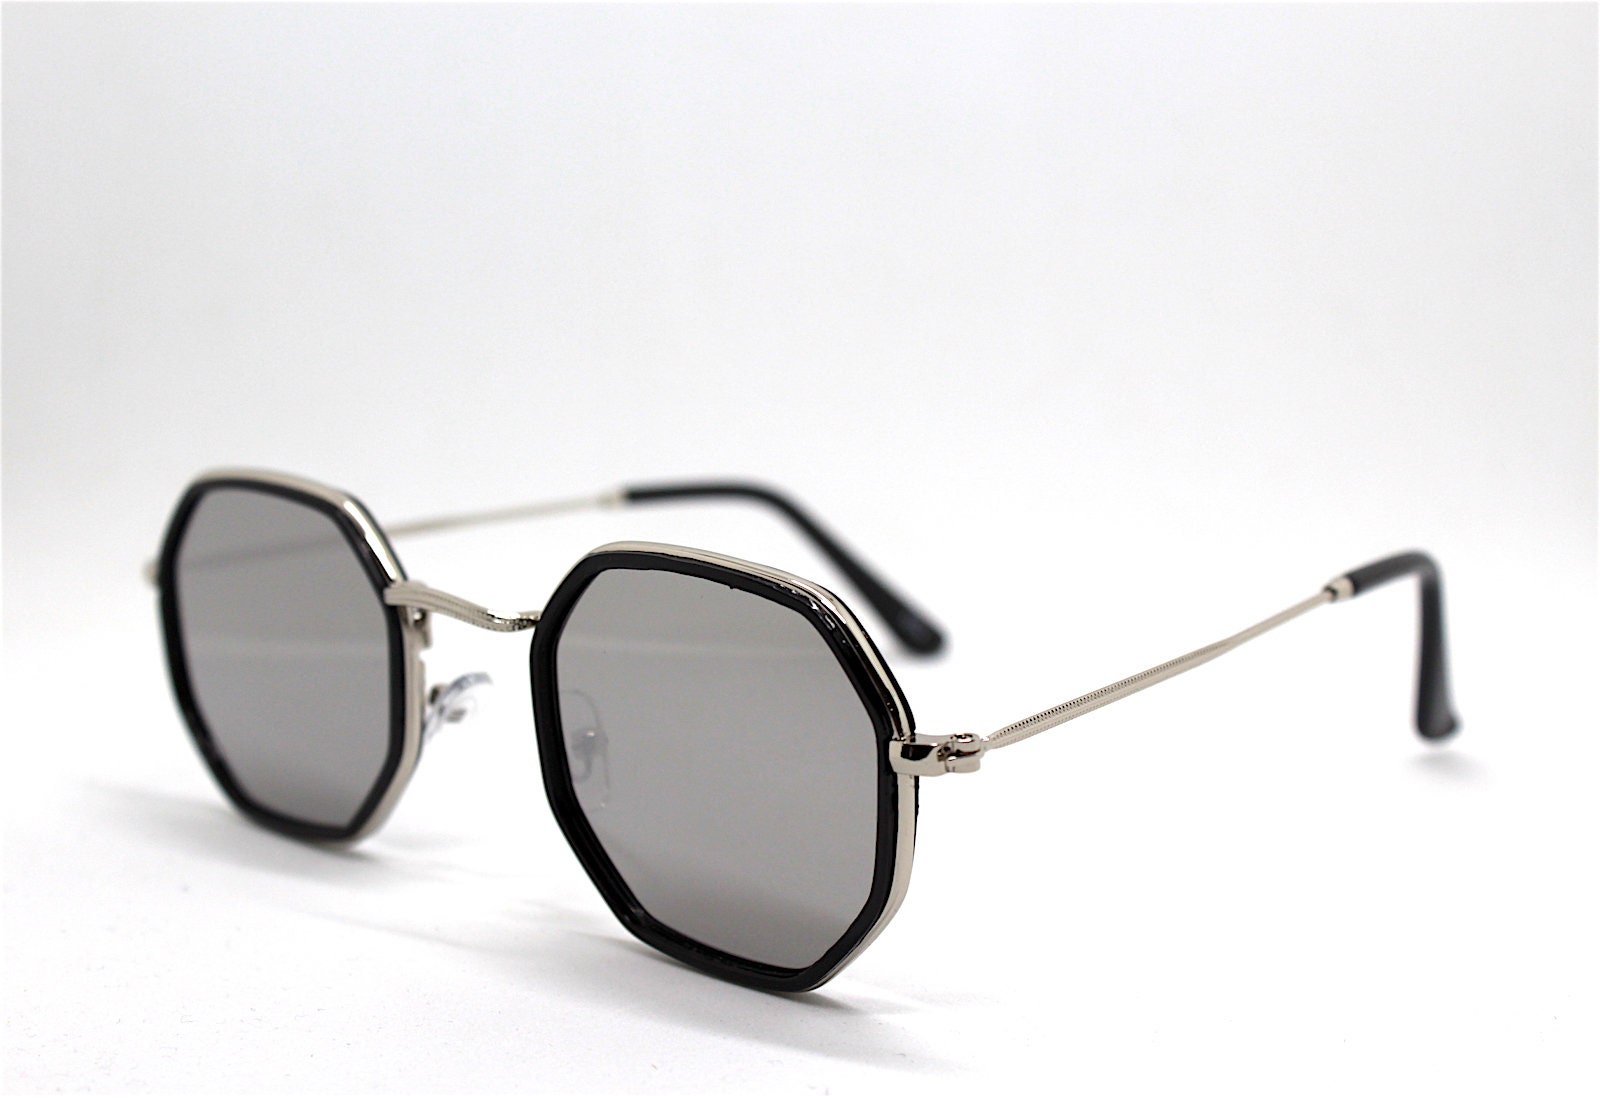 Square octagonal classic sunglasses man woman metal silver black frame ...